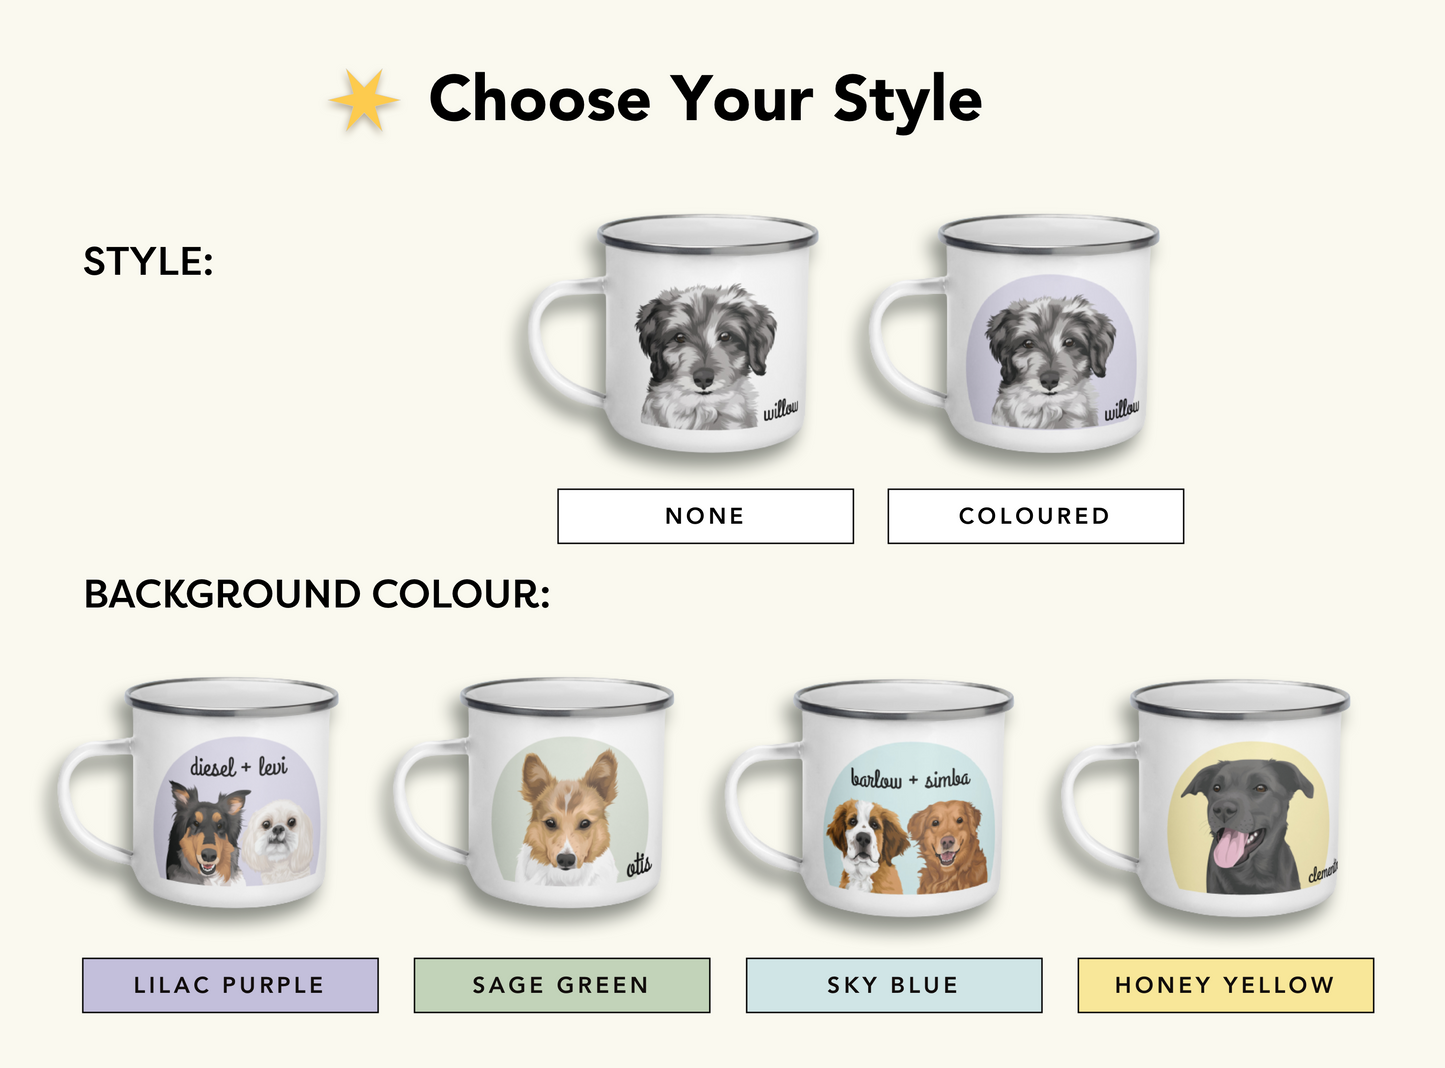 Personalized Pet Portrait Enamel Camp Mug